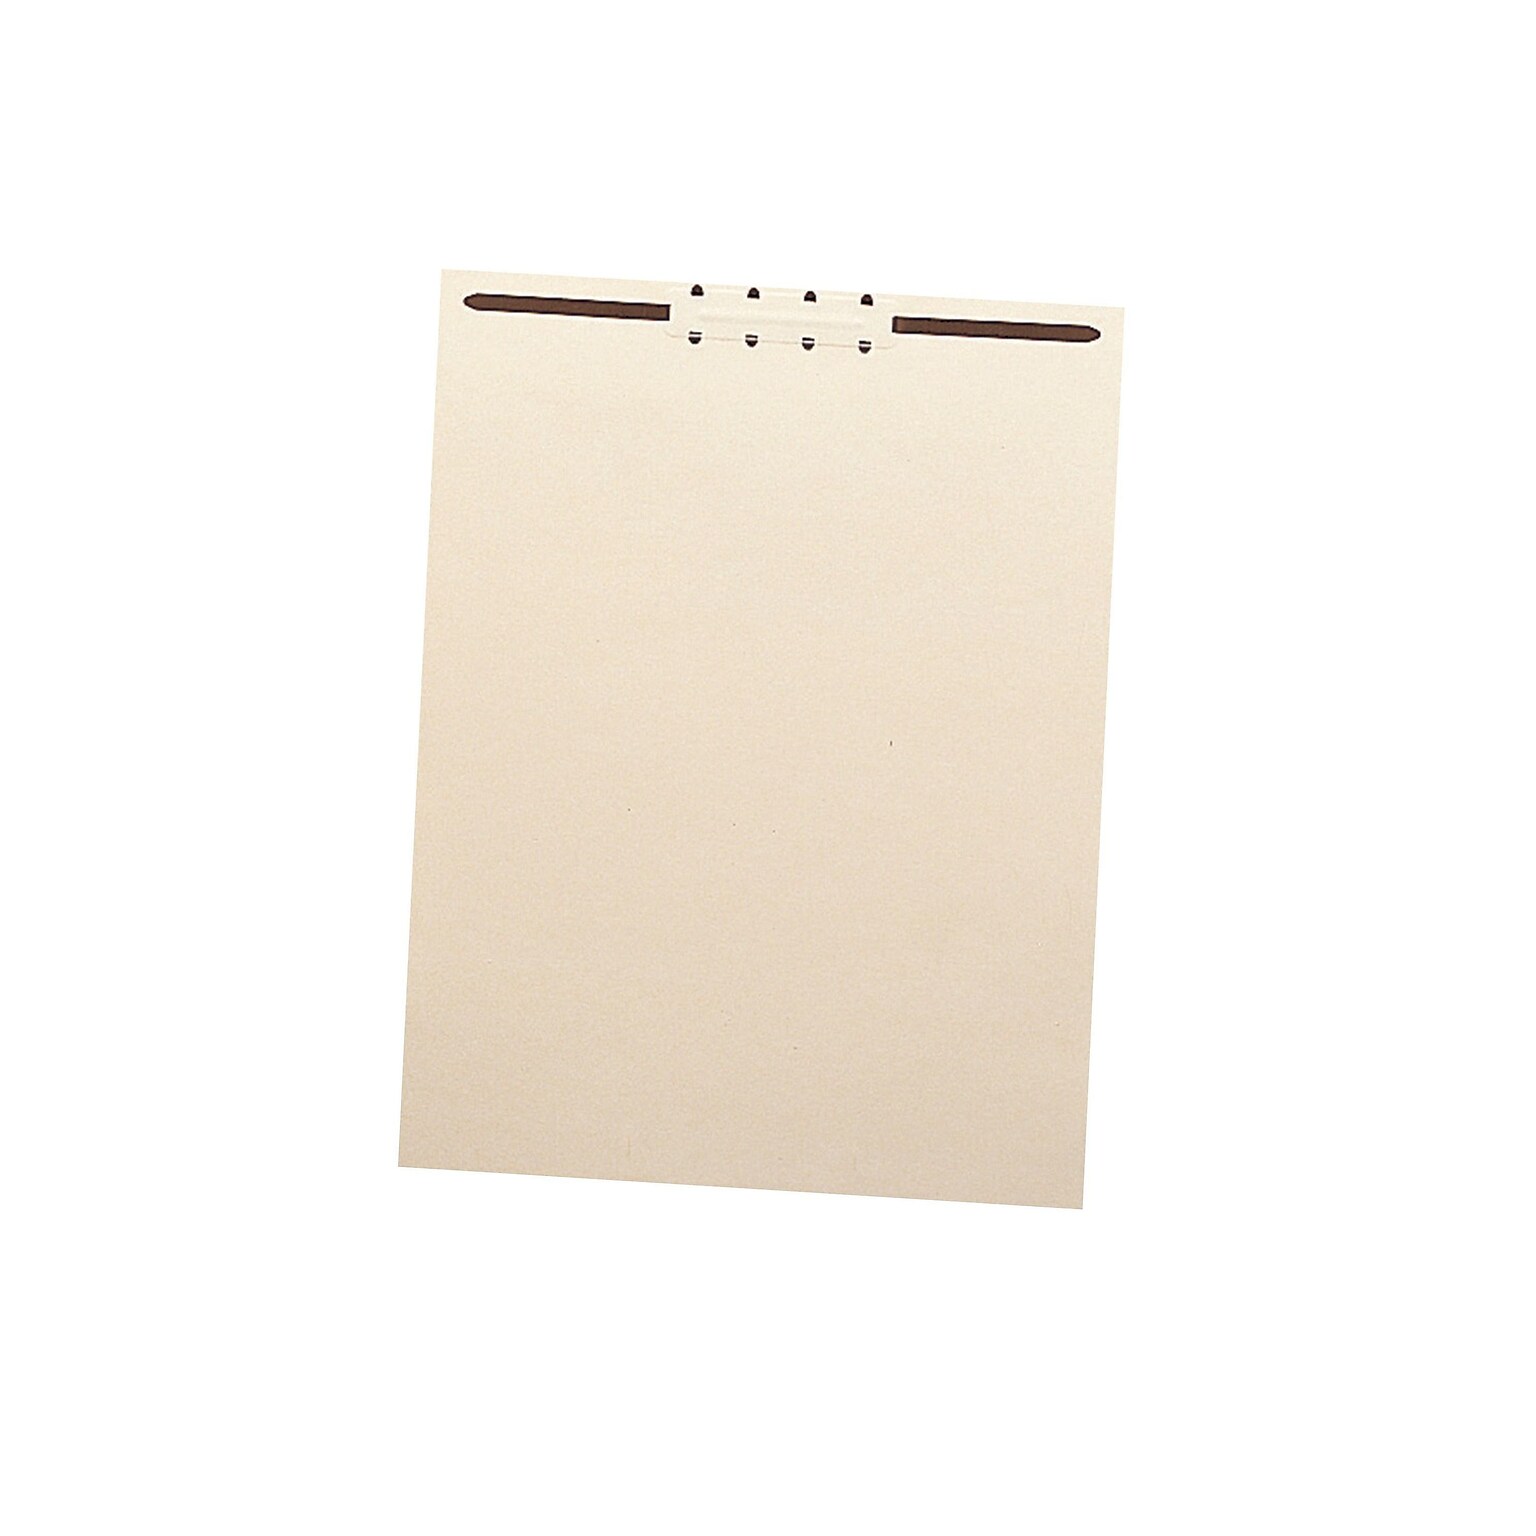 Smead Paperboard File Backs, Letter Size, Manila, 100/Box (35511)